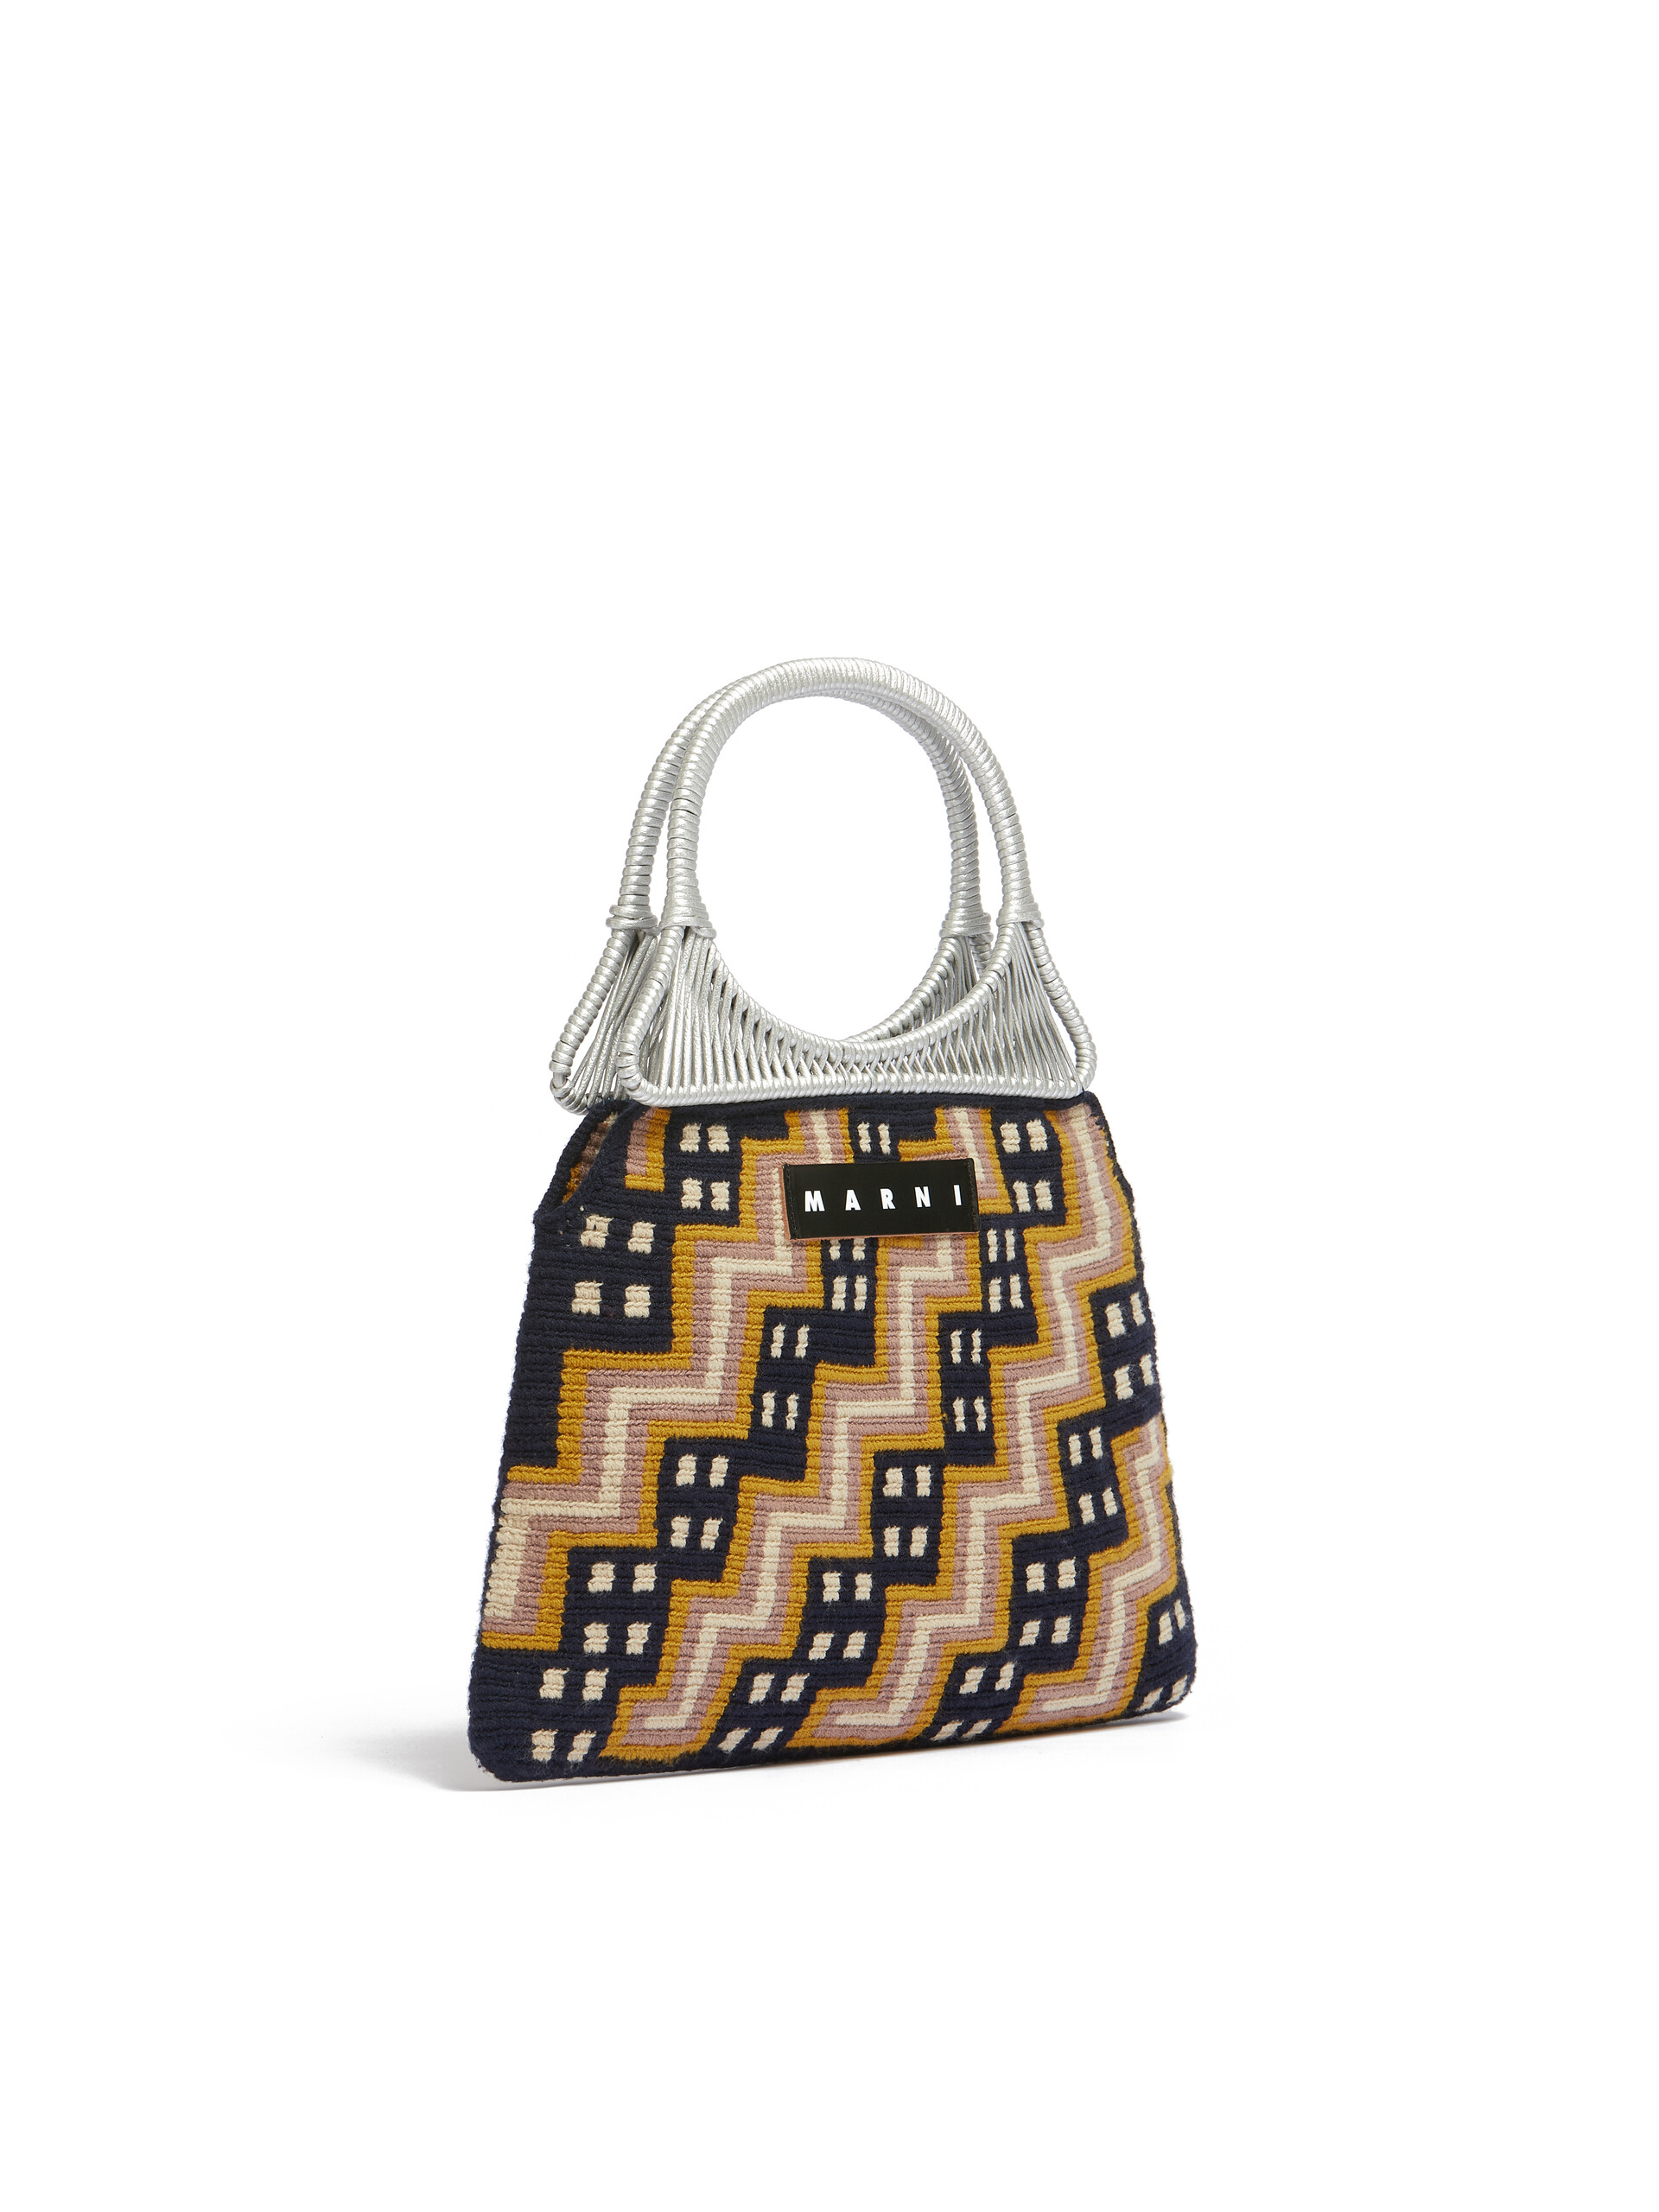 Orange geometric cotton knit MARNI MARKET handbag - Shopping Bags - Image 2